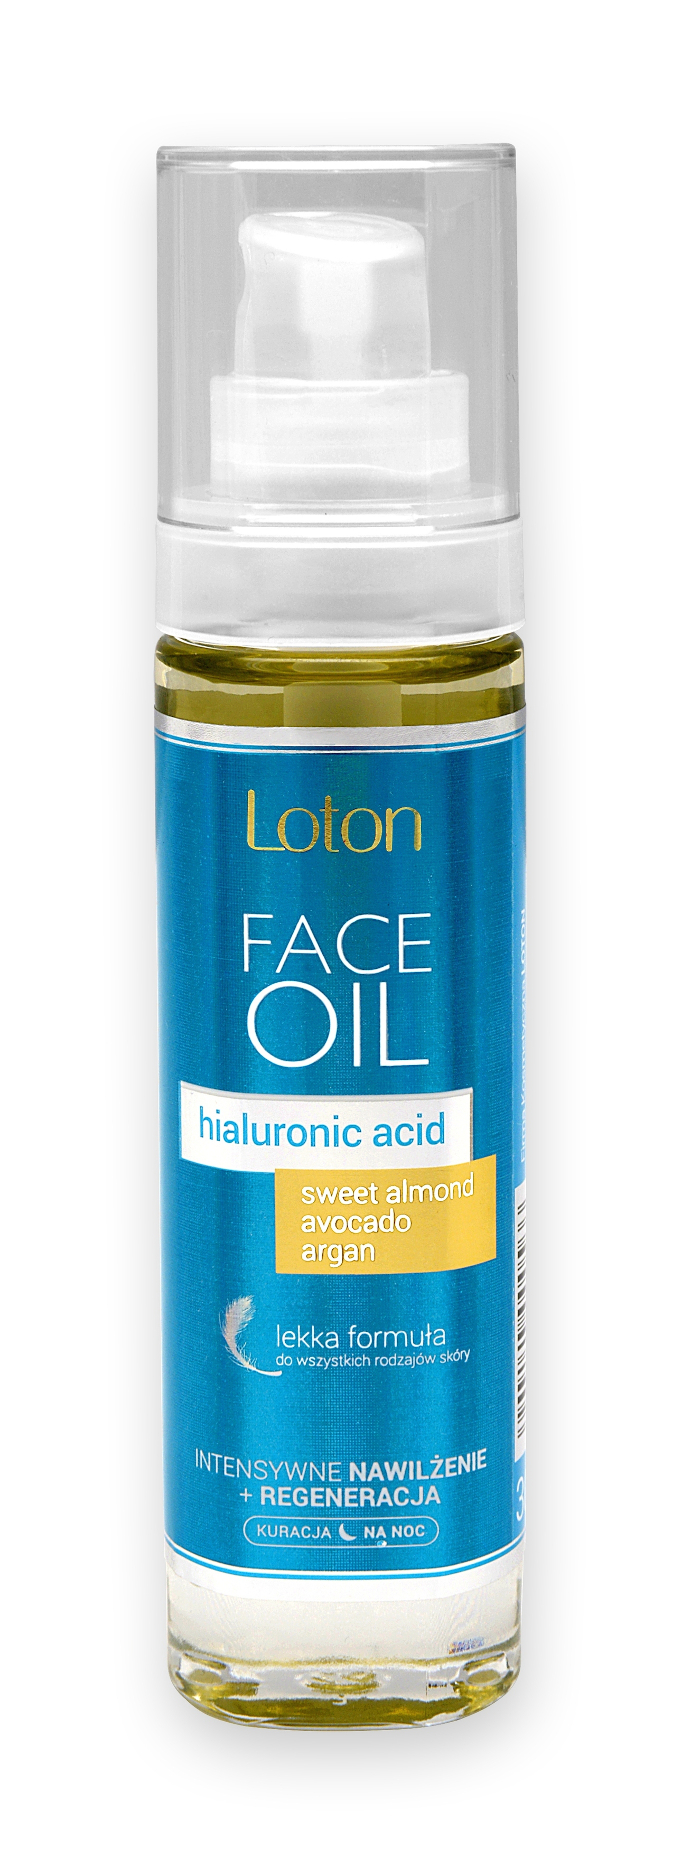 Loton - Face Oil Hialuronic Acid 